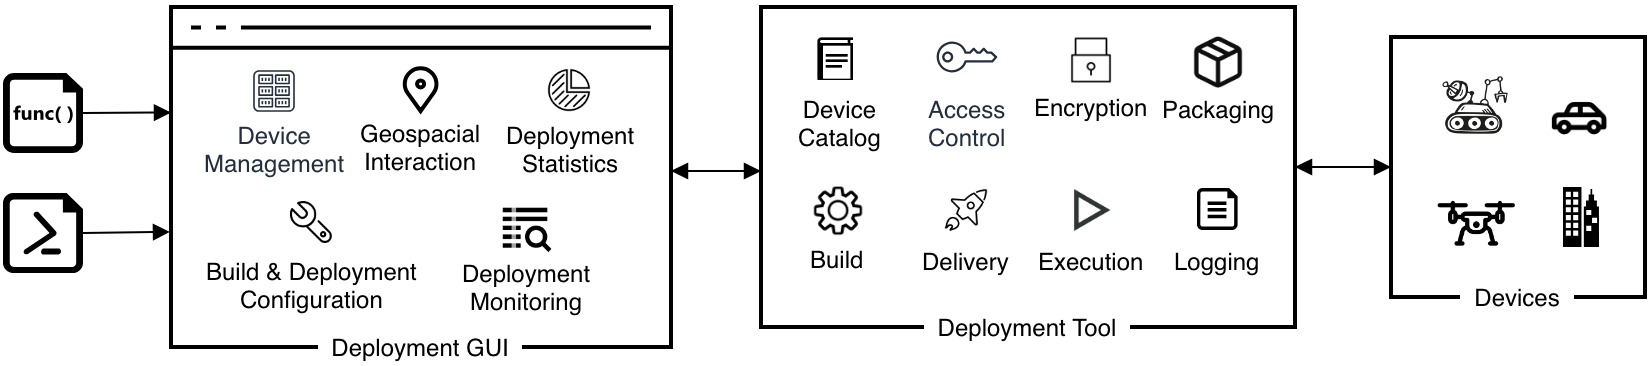 CPSwarm Deployment Tool - Conceptual Diagram